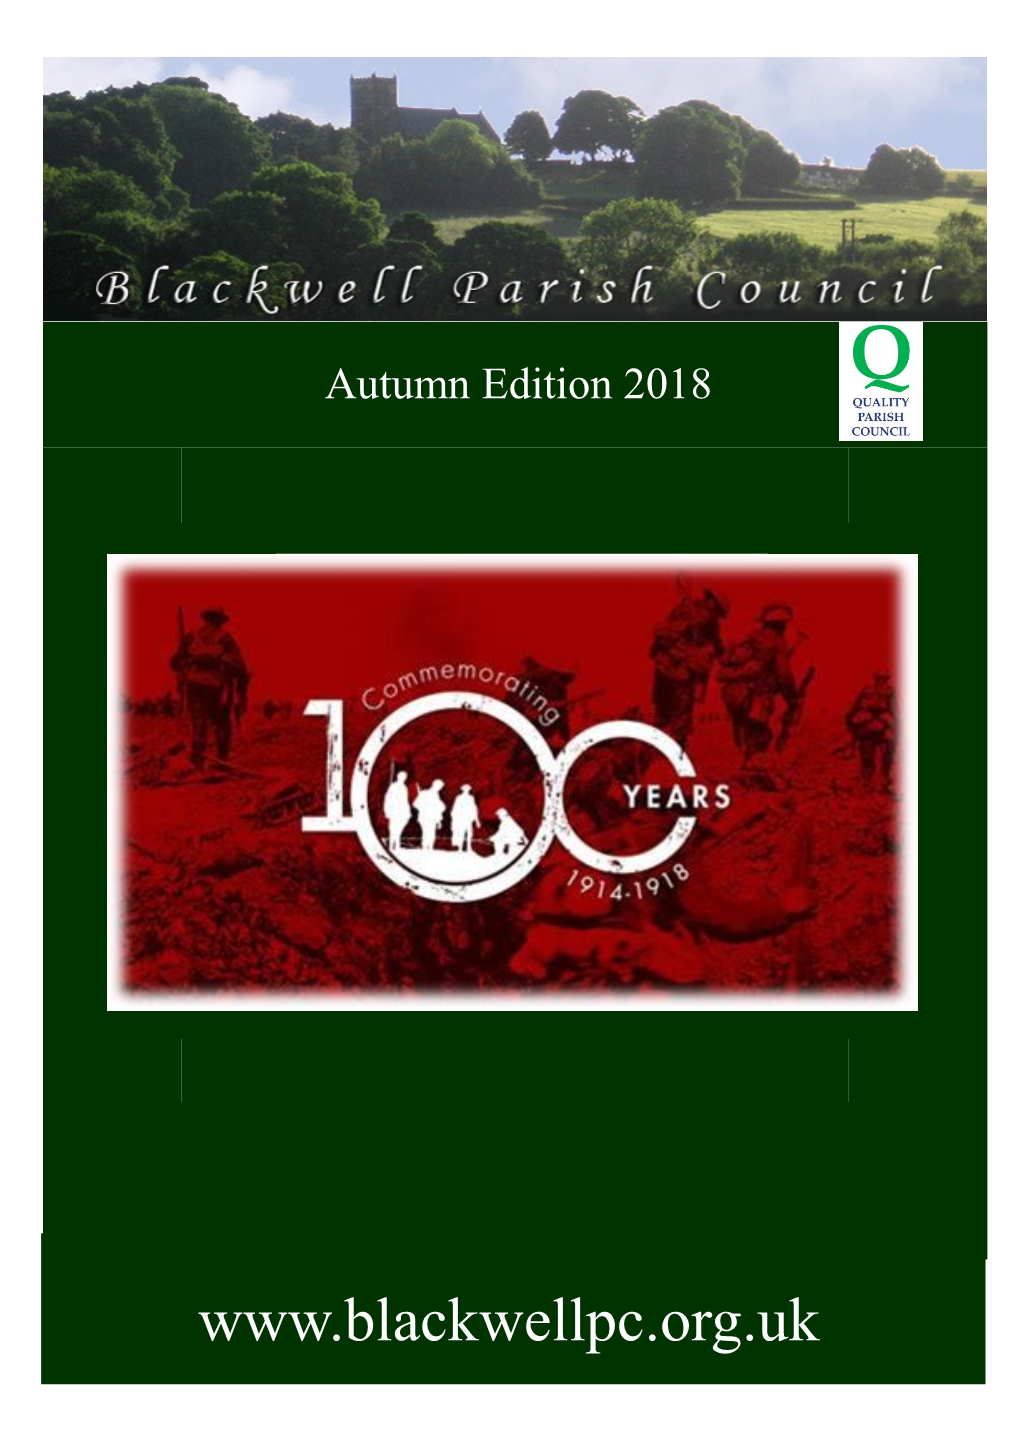 Blackwell Parish Newsletter Autumn Edition 2018